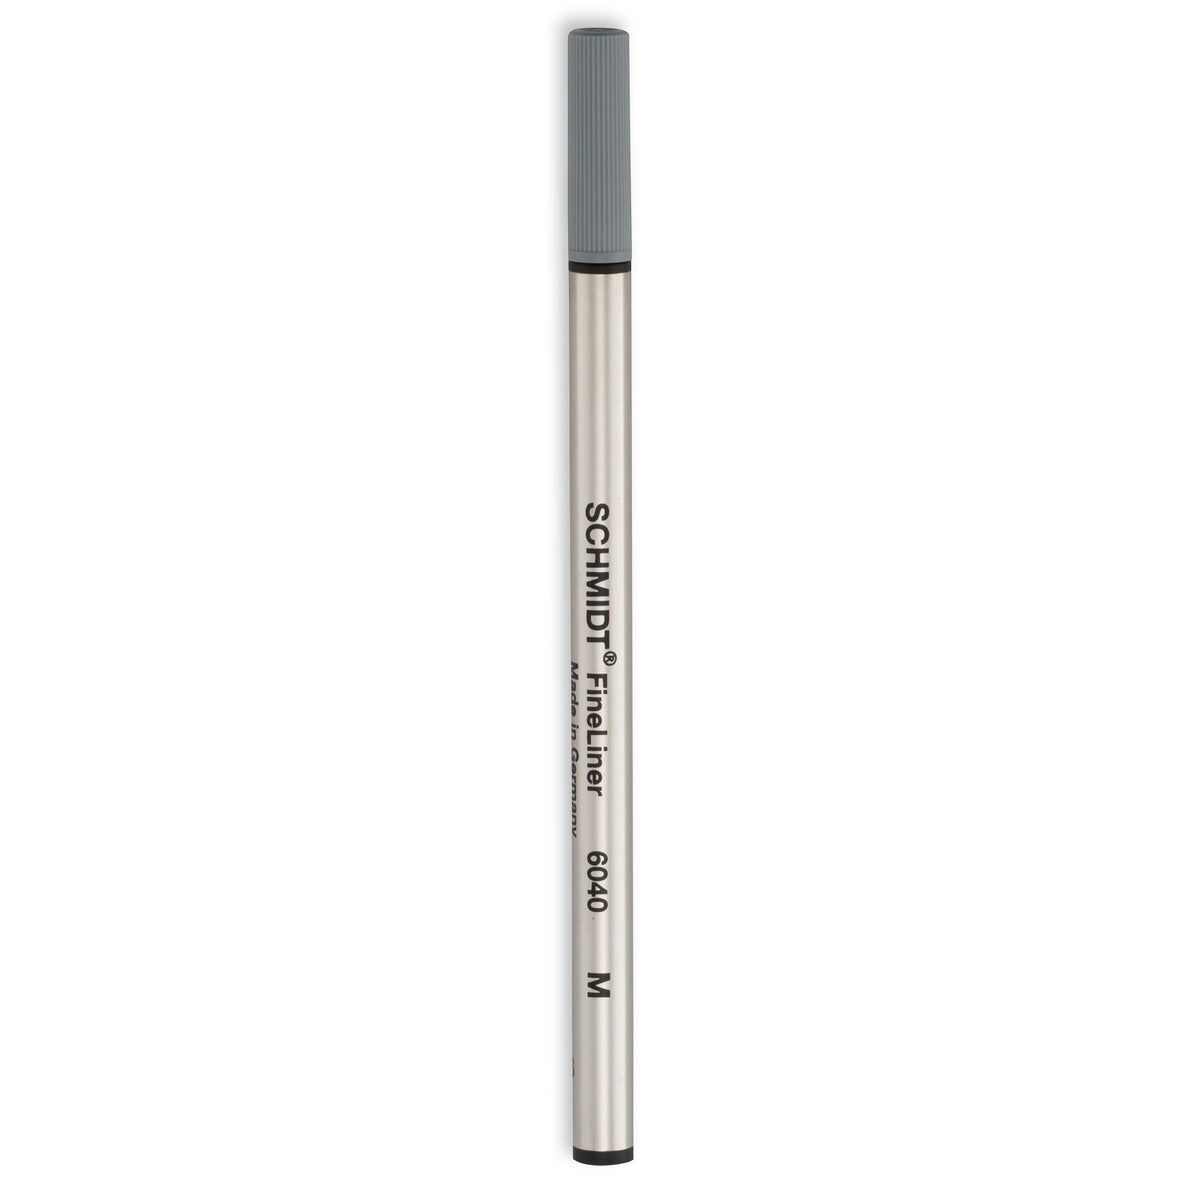 Schmidt 6040 FineLiner Fiber Tip Metal Rollerball Refill in Black - Me -  Goldspot Pens